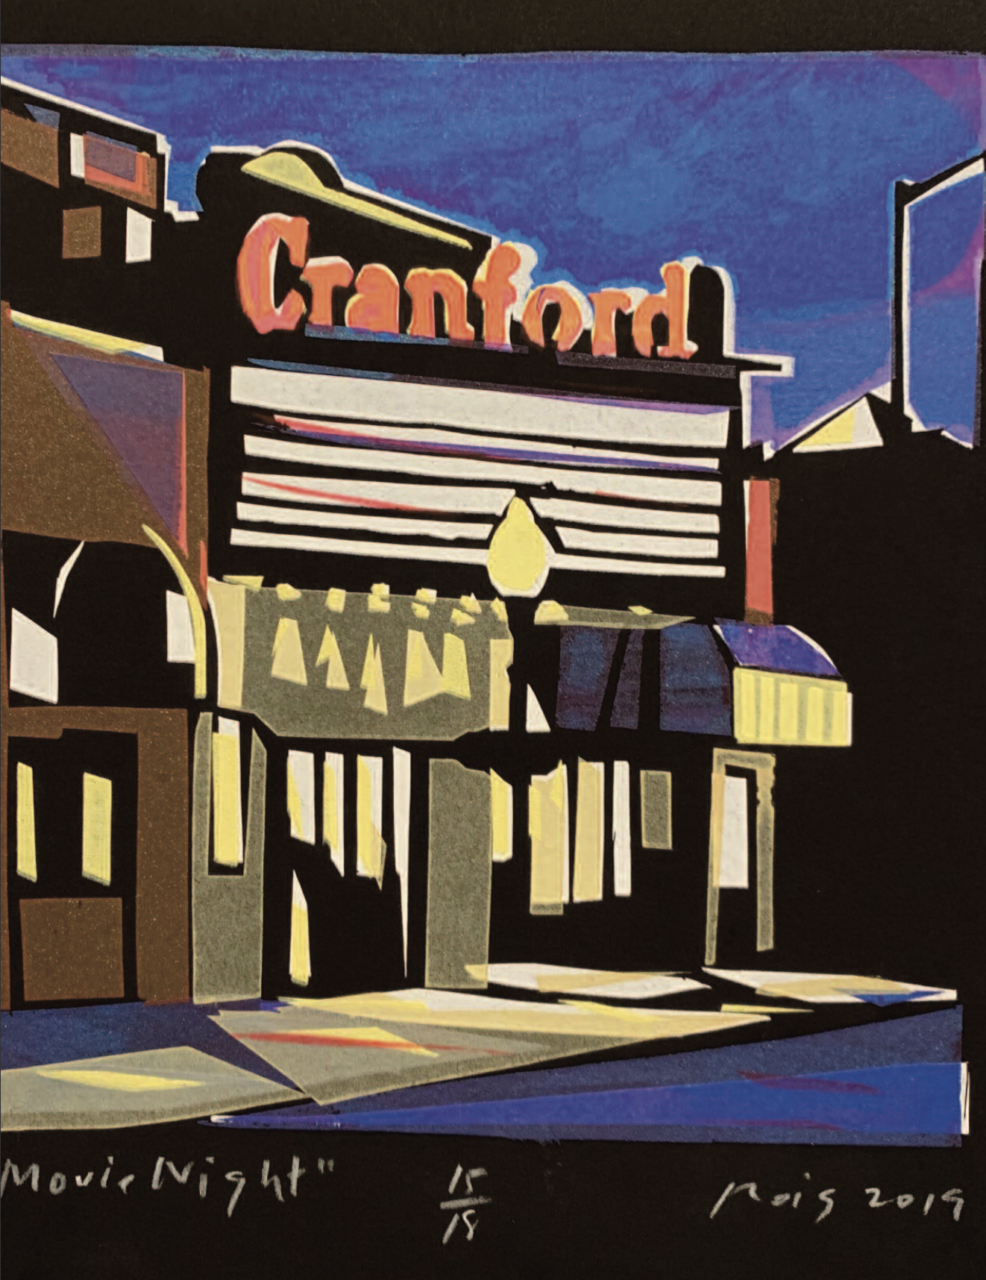 Cranford NJ Artist Cards Series, Cranford NJ Artist Cards Series: Artist Spotlight May 2020 Ricardo Roig